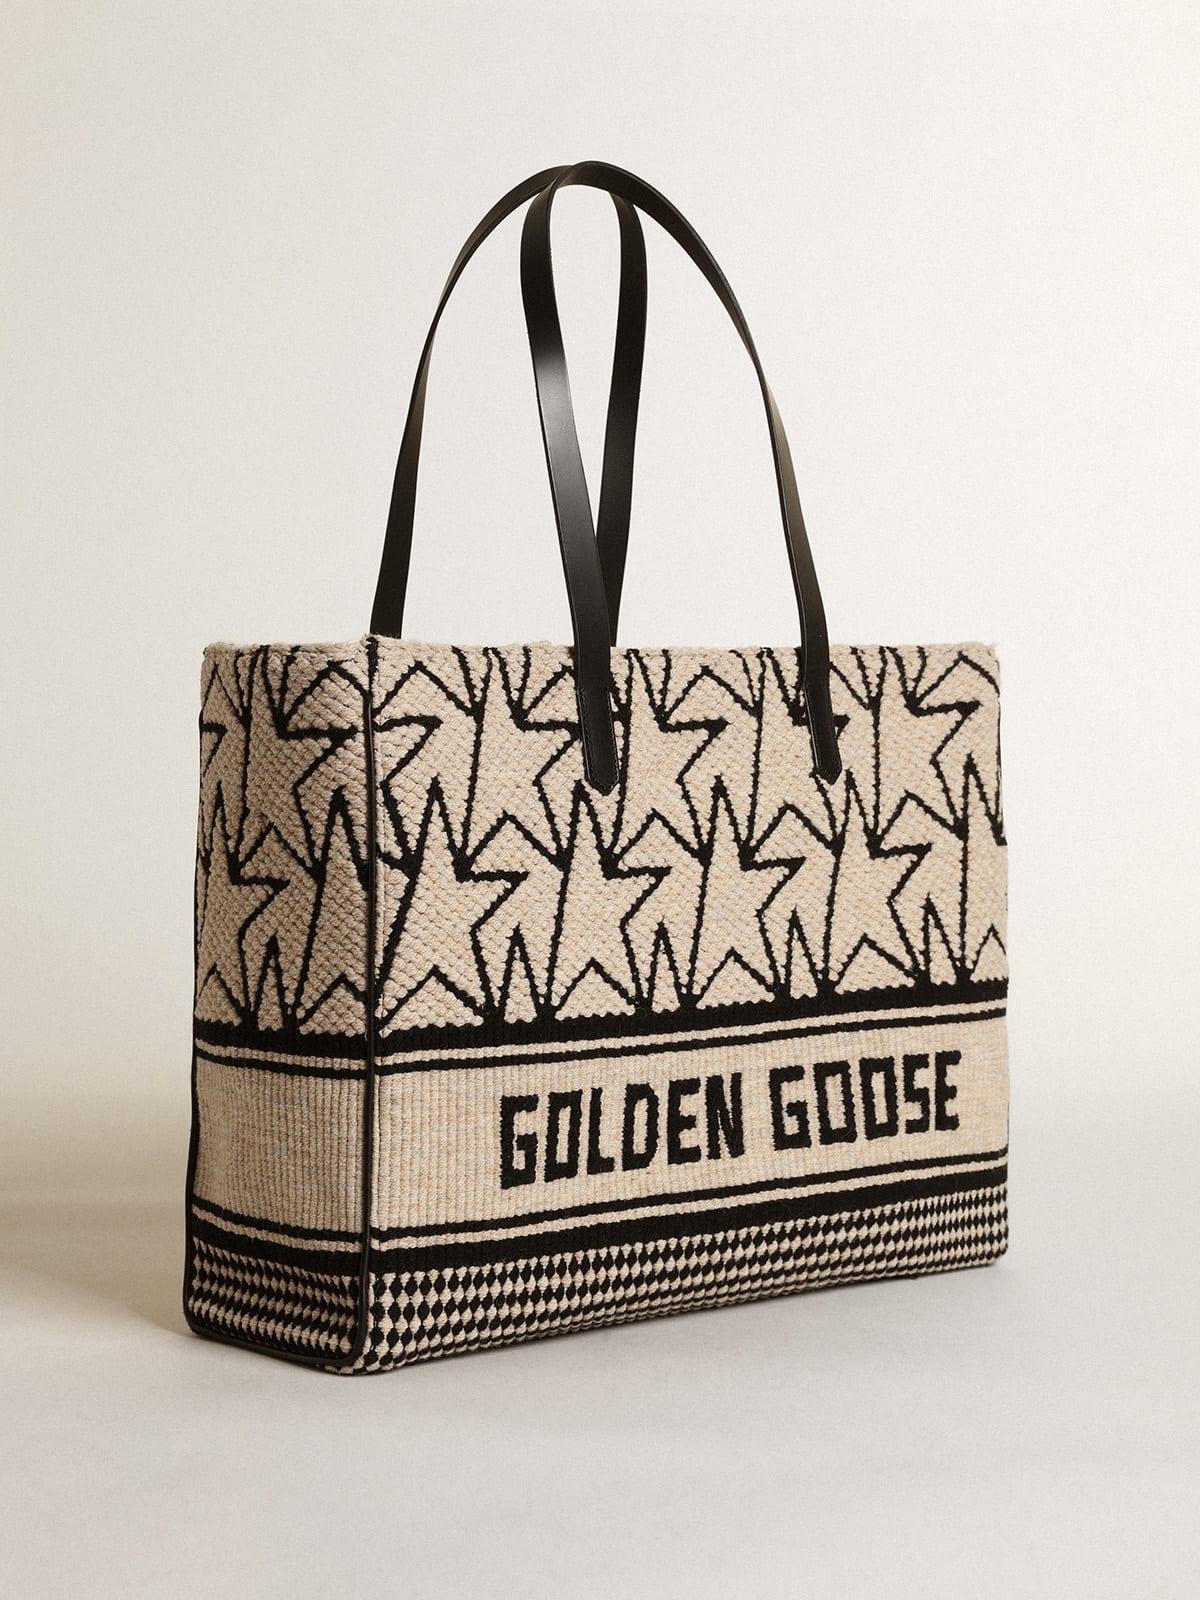 Golden Goose - Bolso California Bag East-West en lana jacquard color blanco leche con monogramas y mensaje Golden Goose de color negro en contraste in 